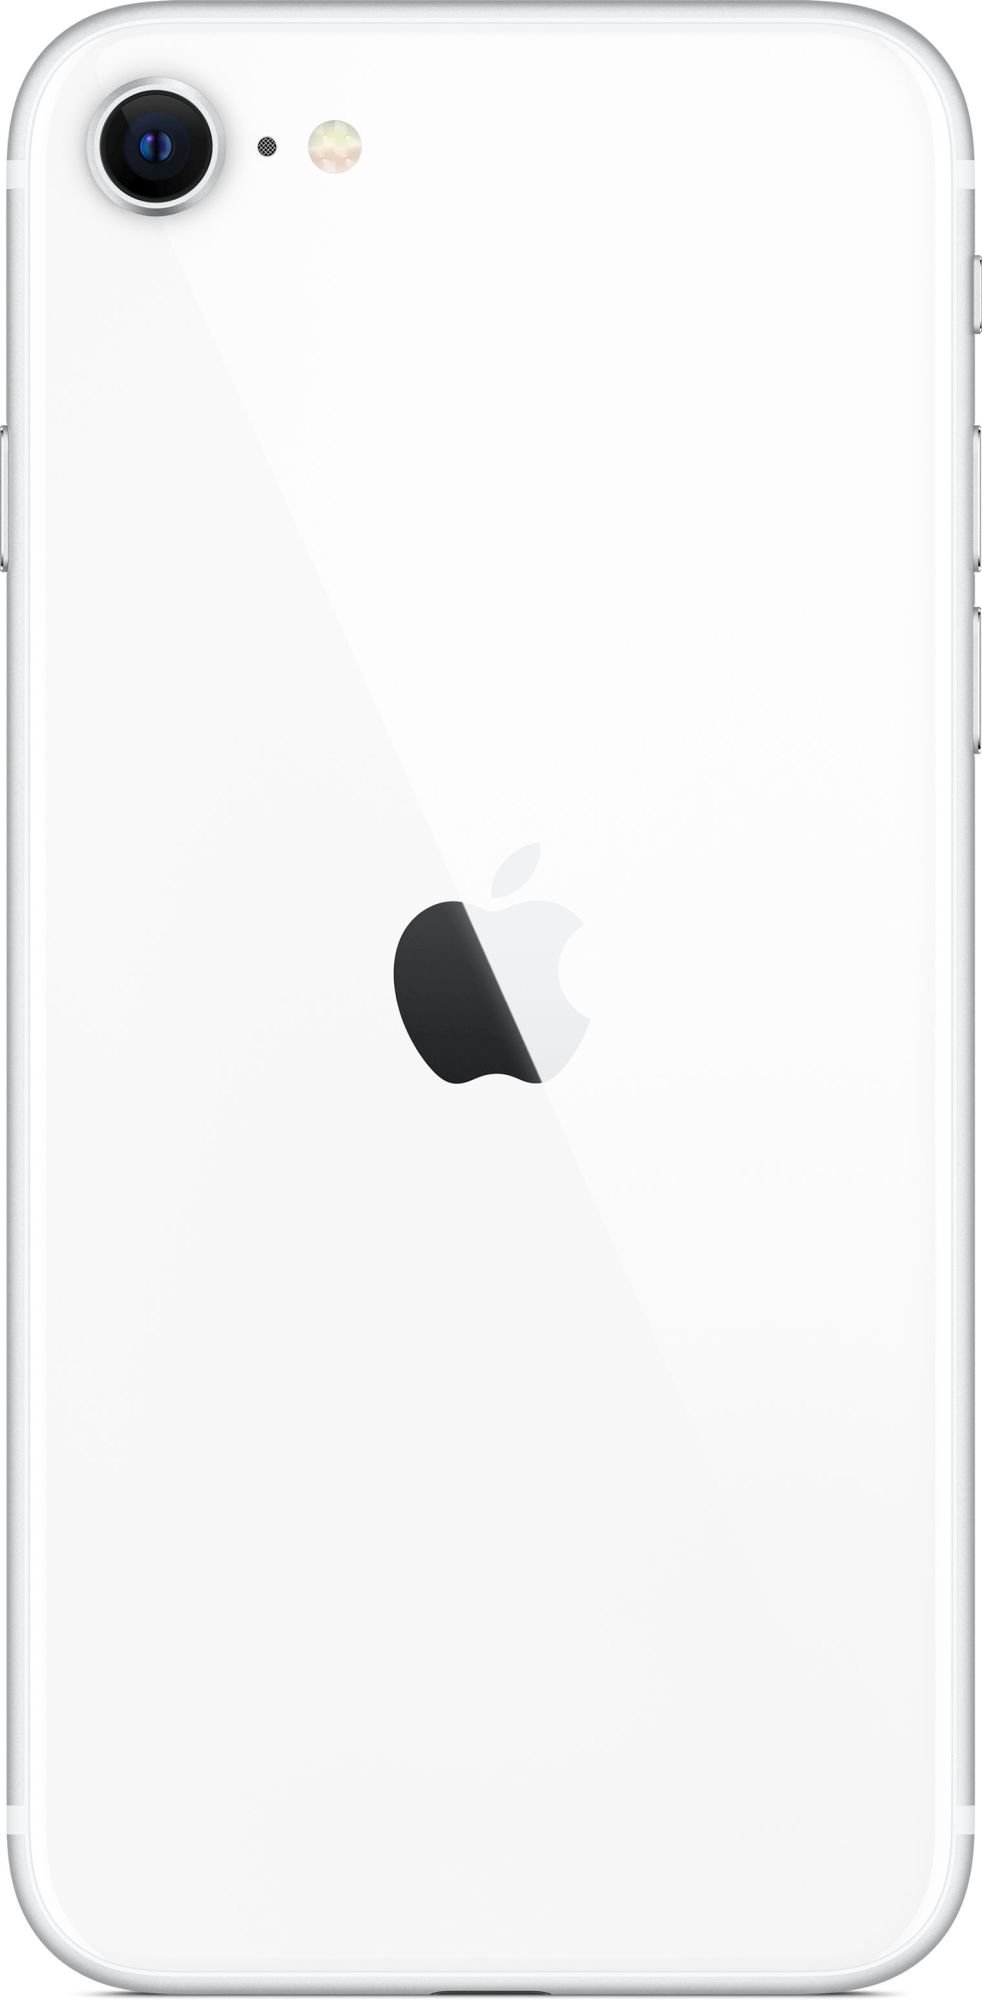 Apple iPhone SE (2020) 128GB White